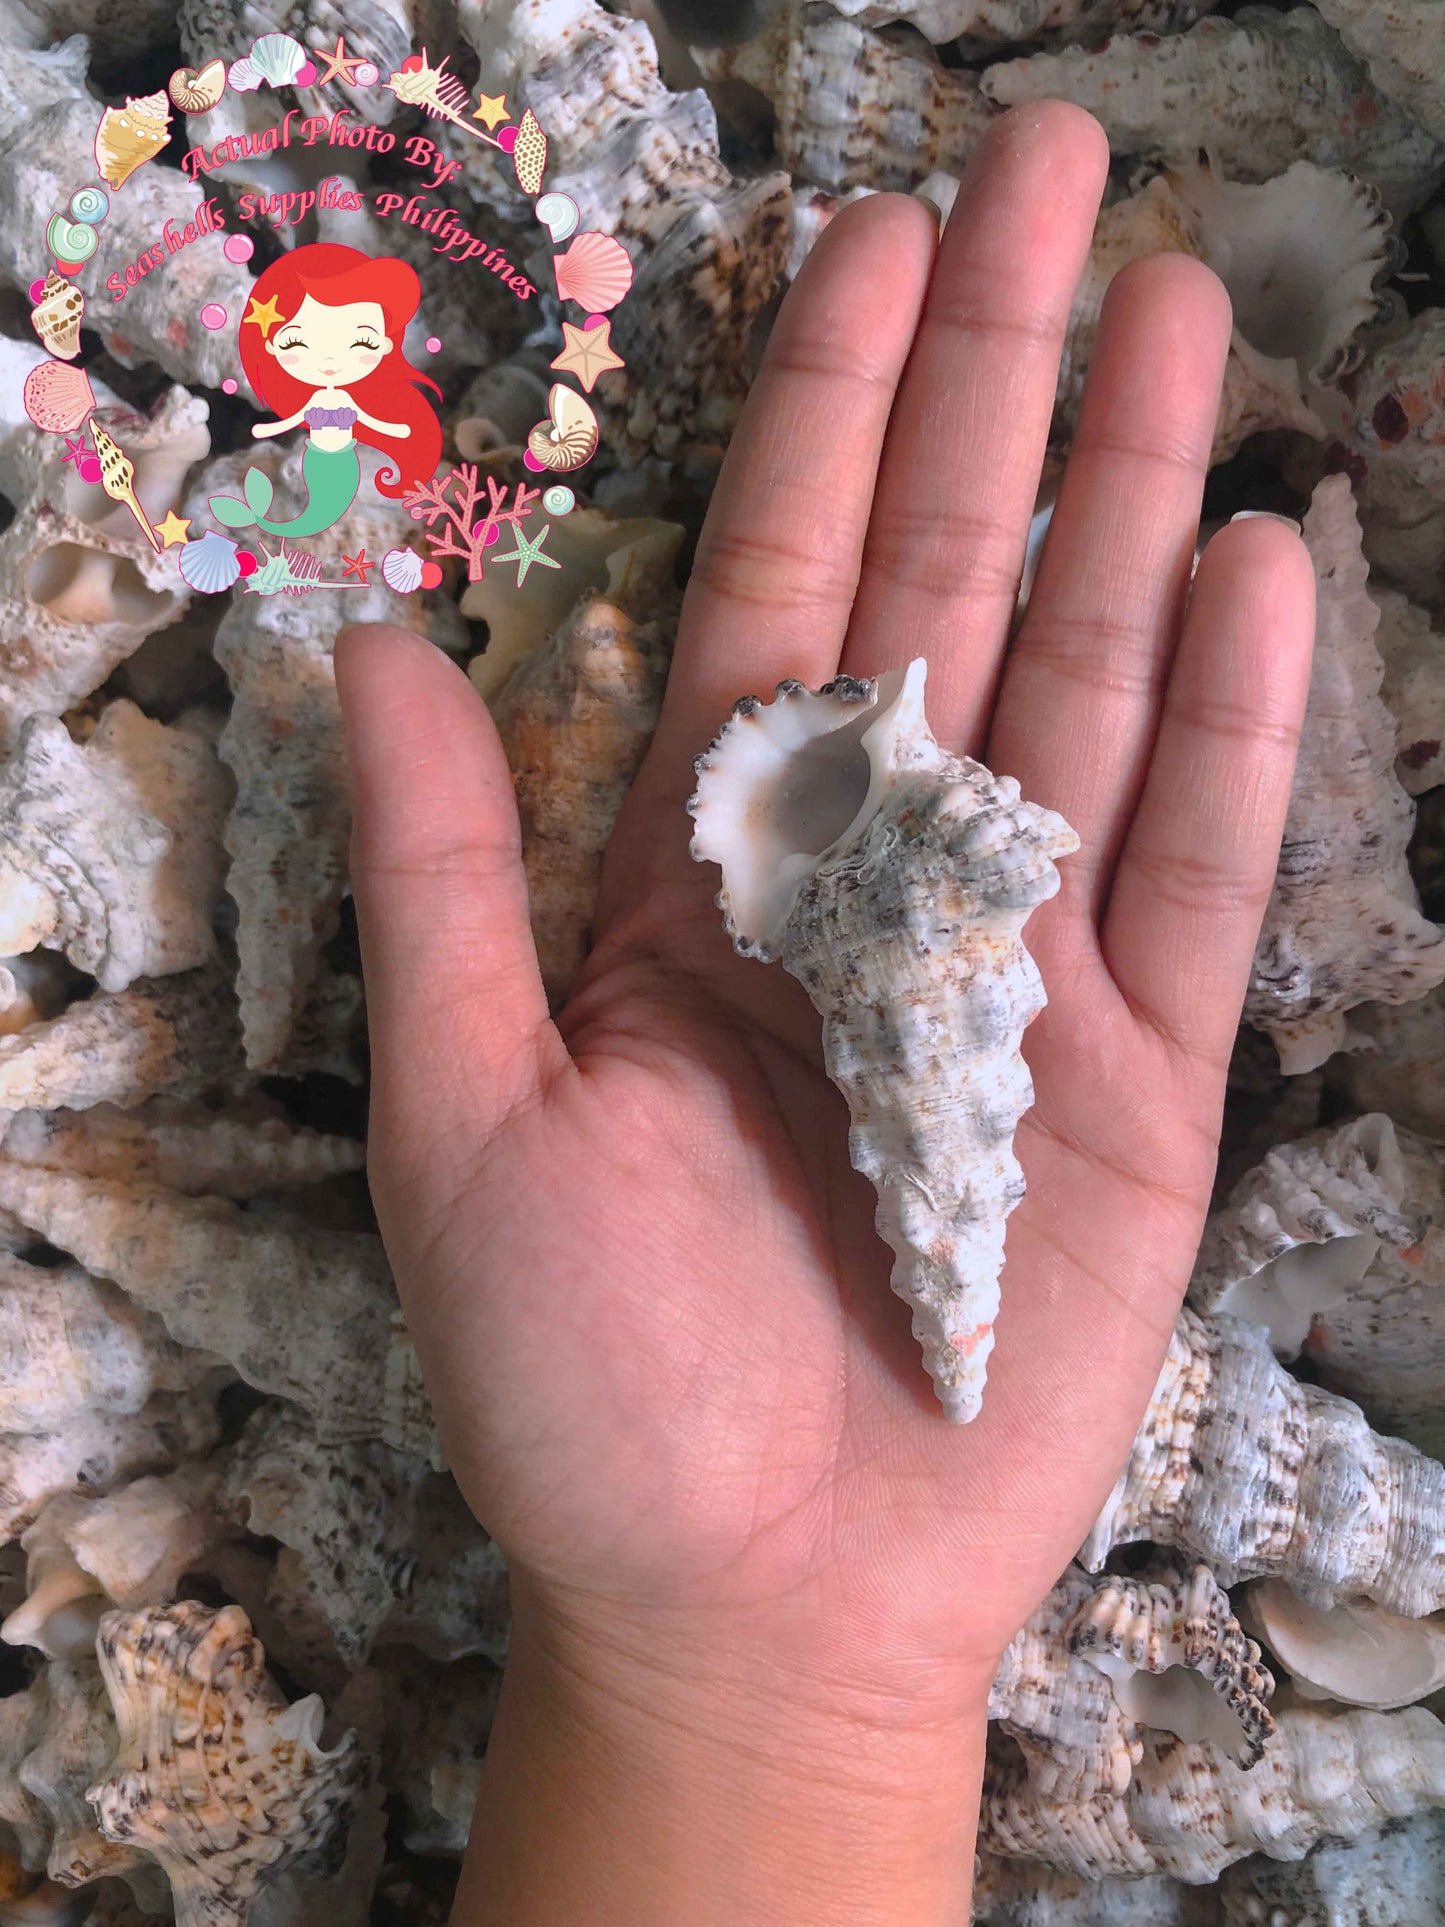 1 Kilo | Nodolussum | Giant Knobbed Cerith | Seashells | Sea shells